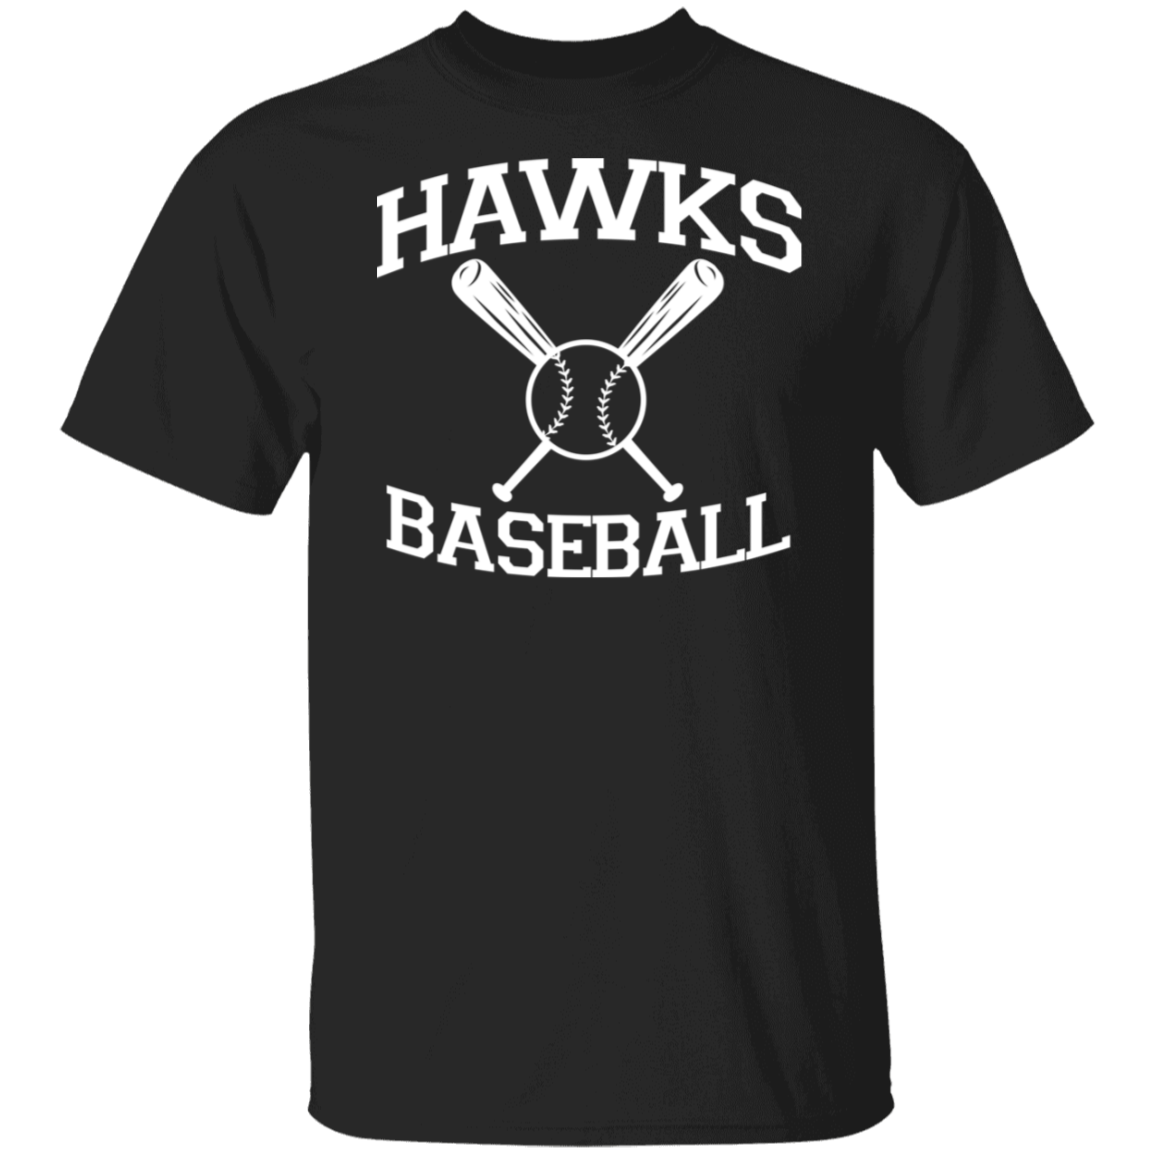 Hawks Baseball White Print T-Shirt